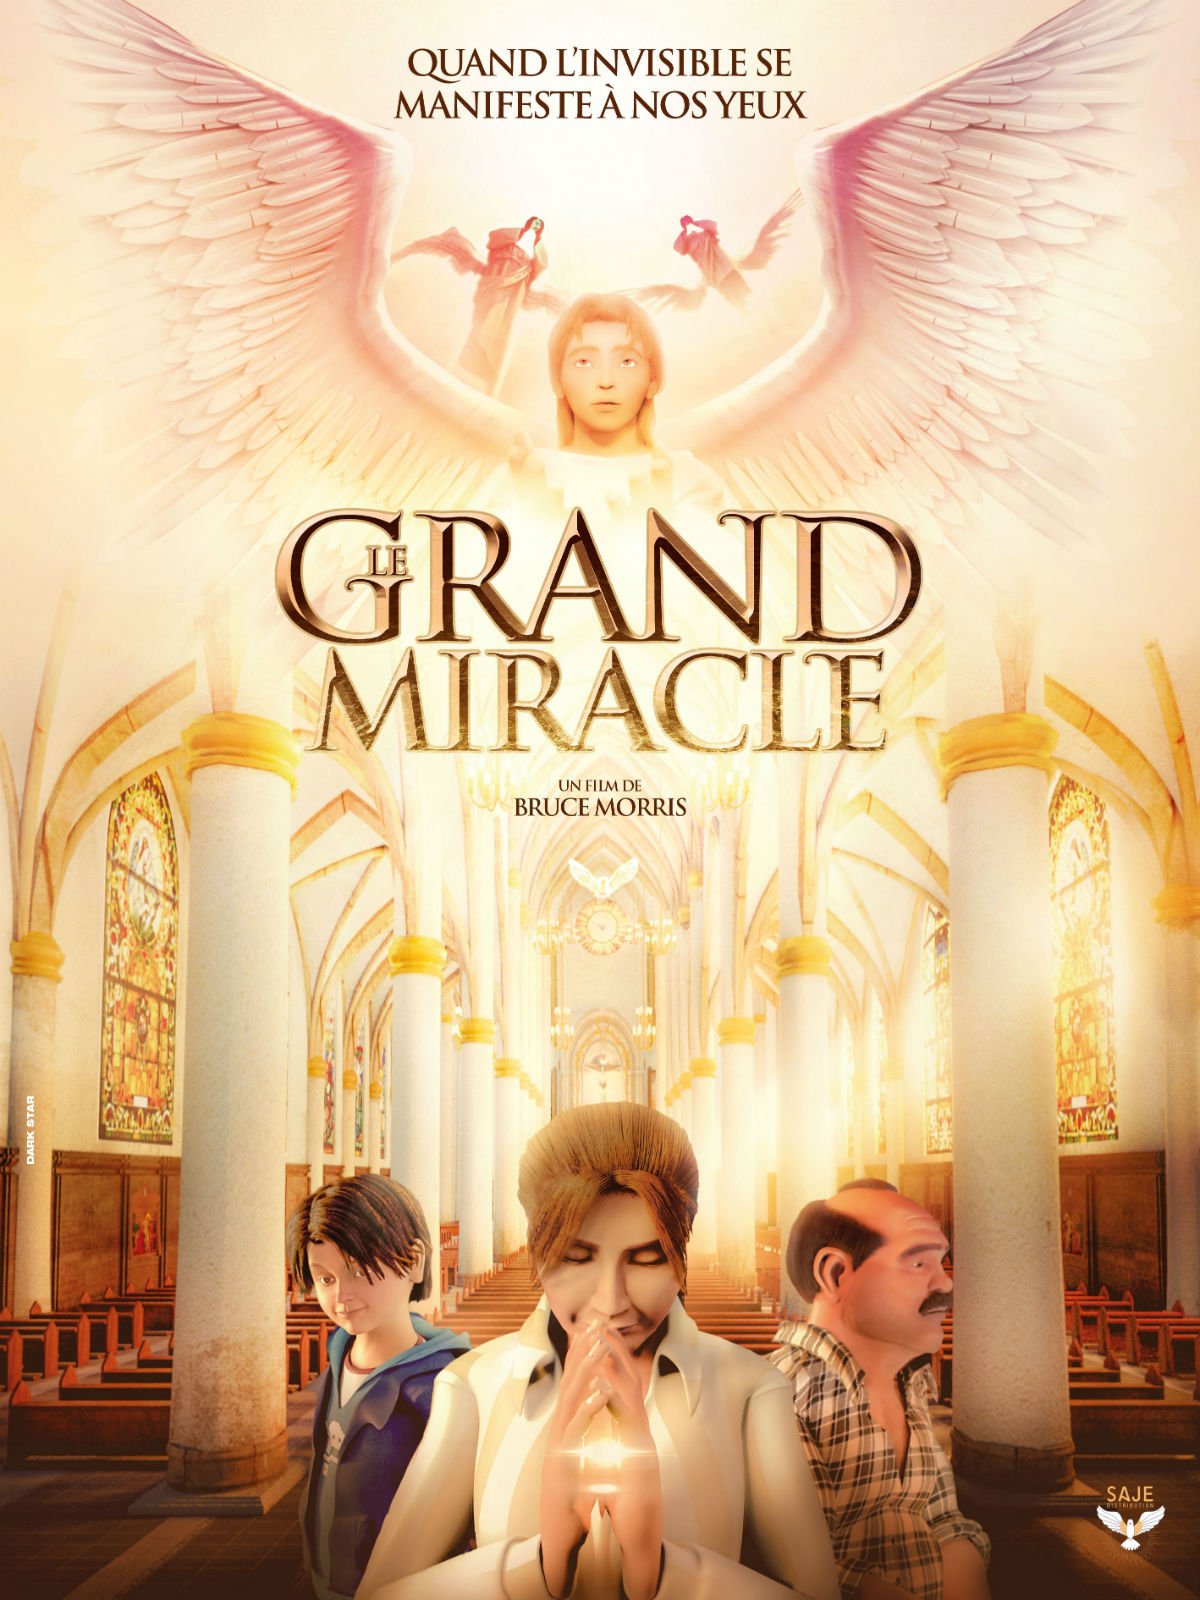 Le Grand Miracle en DVD : Le Grand miracle - AlloCiné